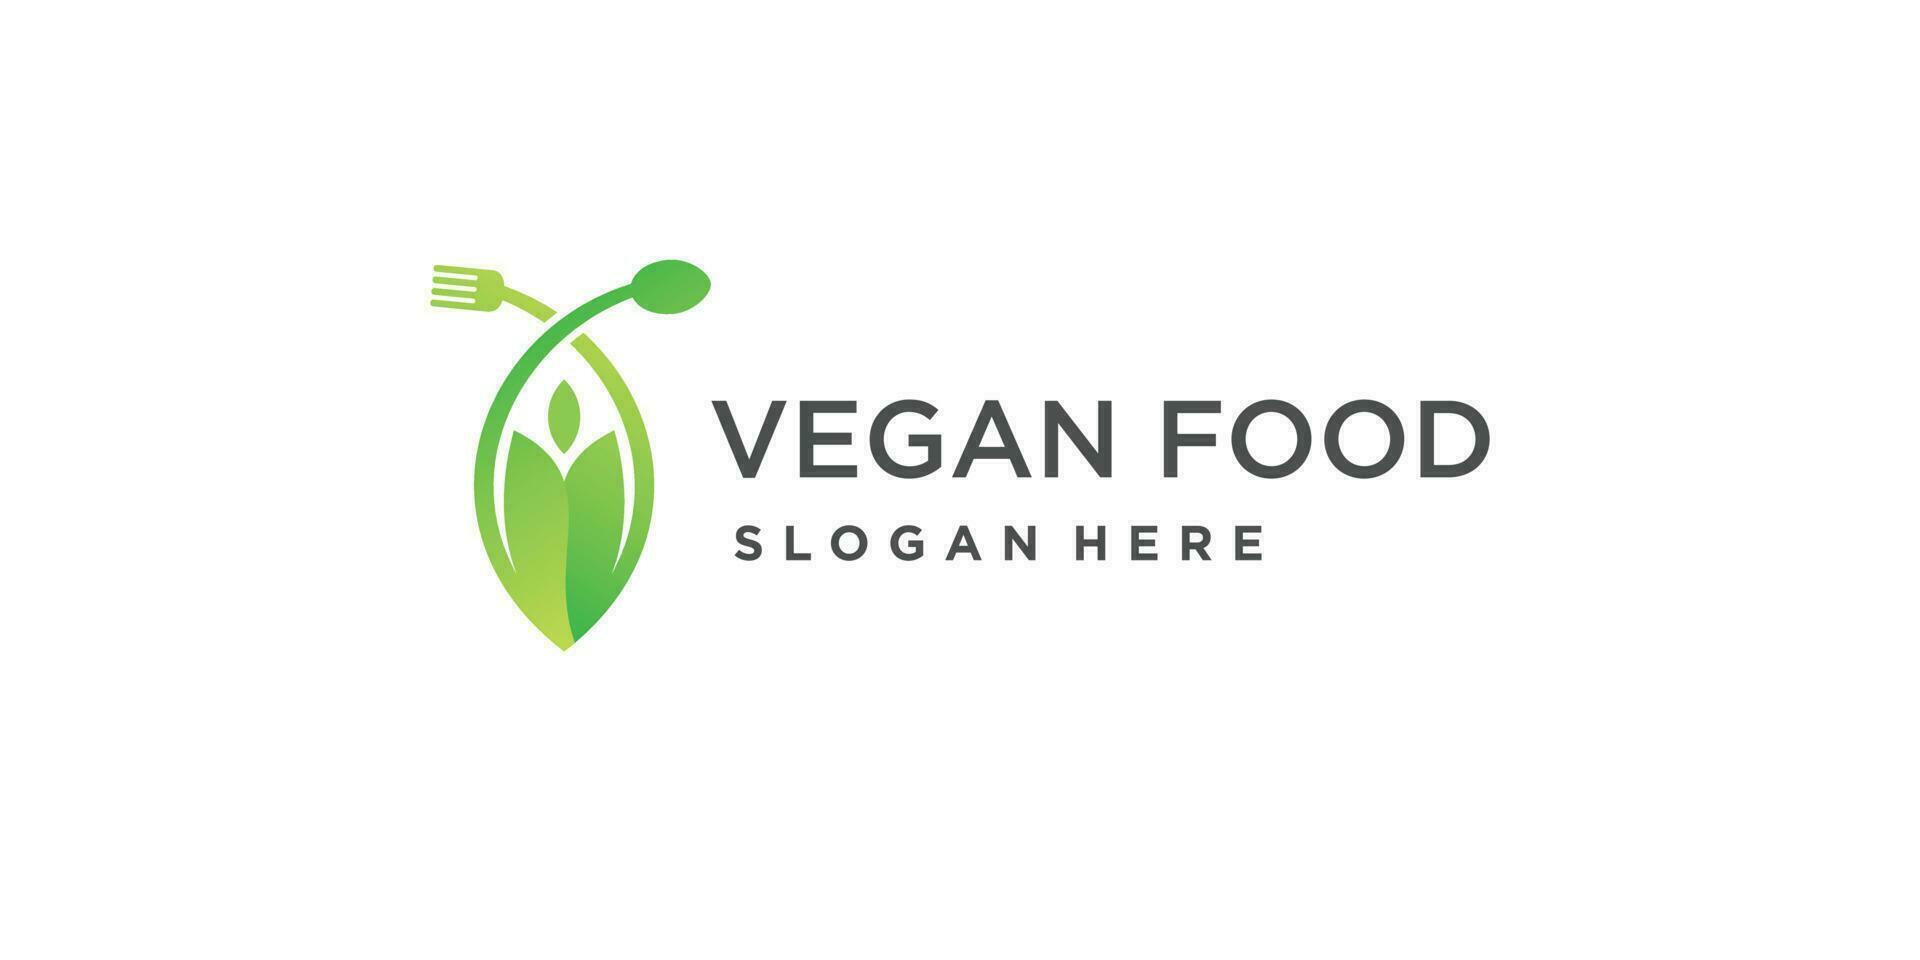 Vegan food logo vector design with modern style